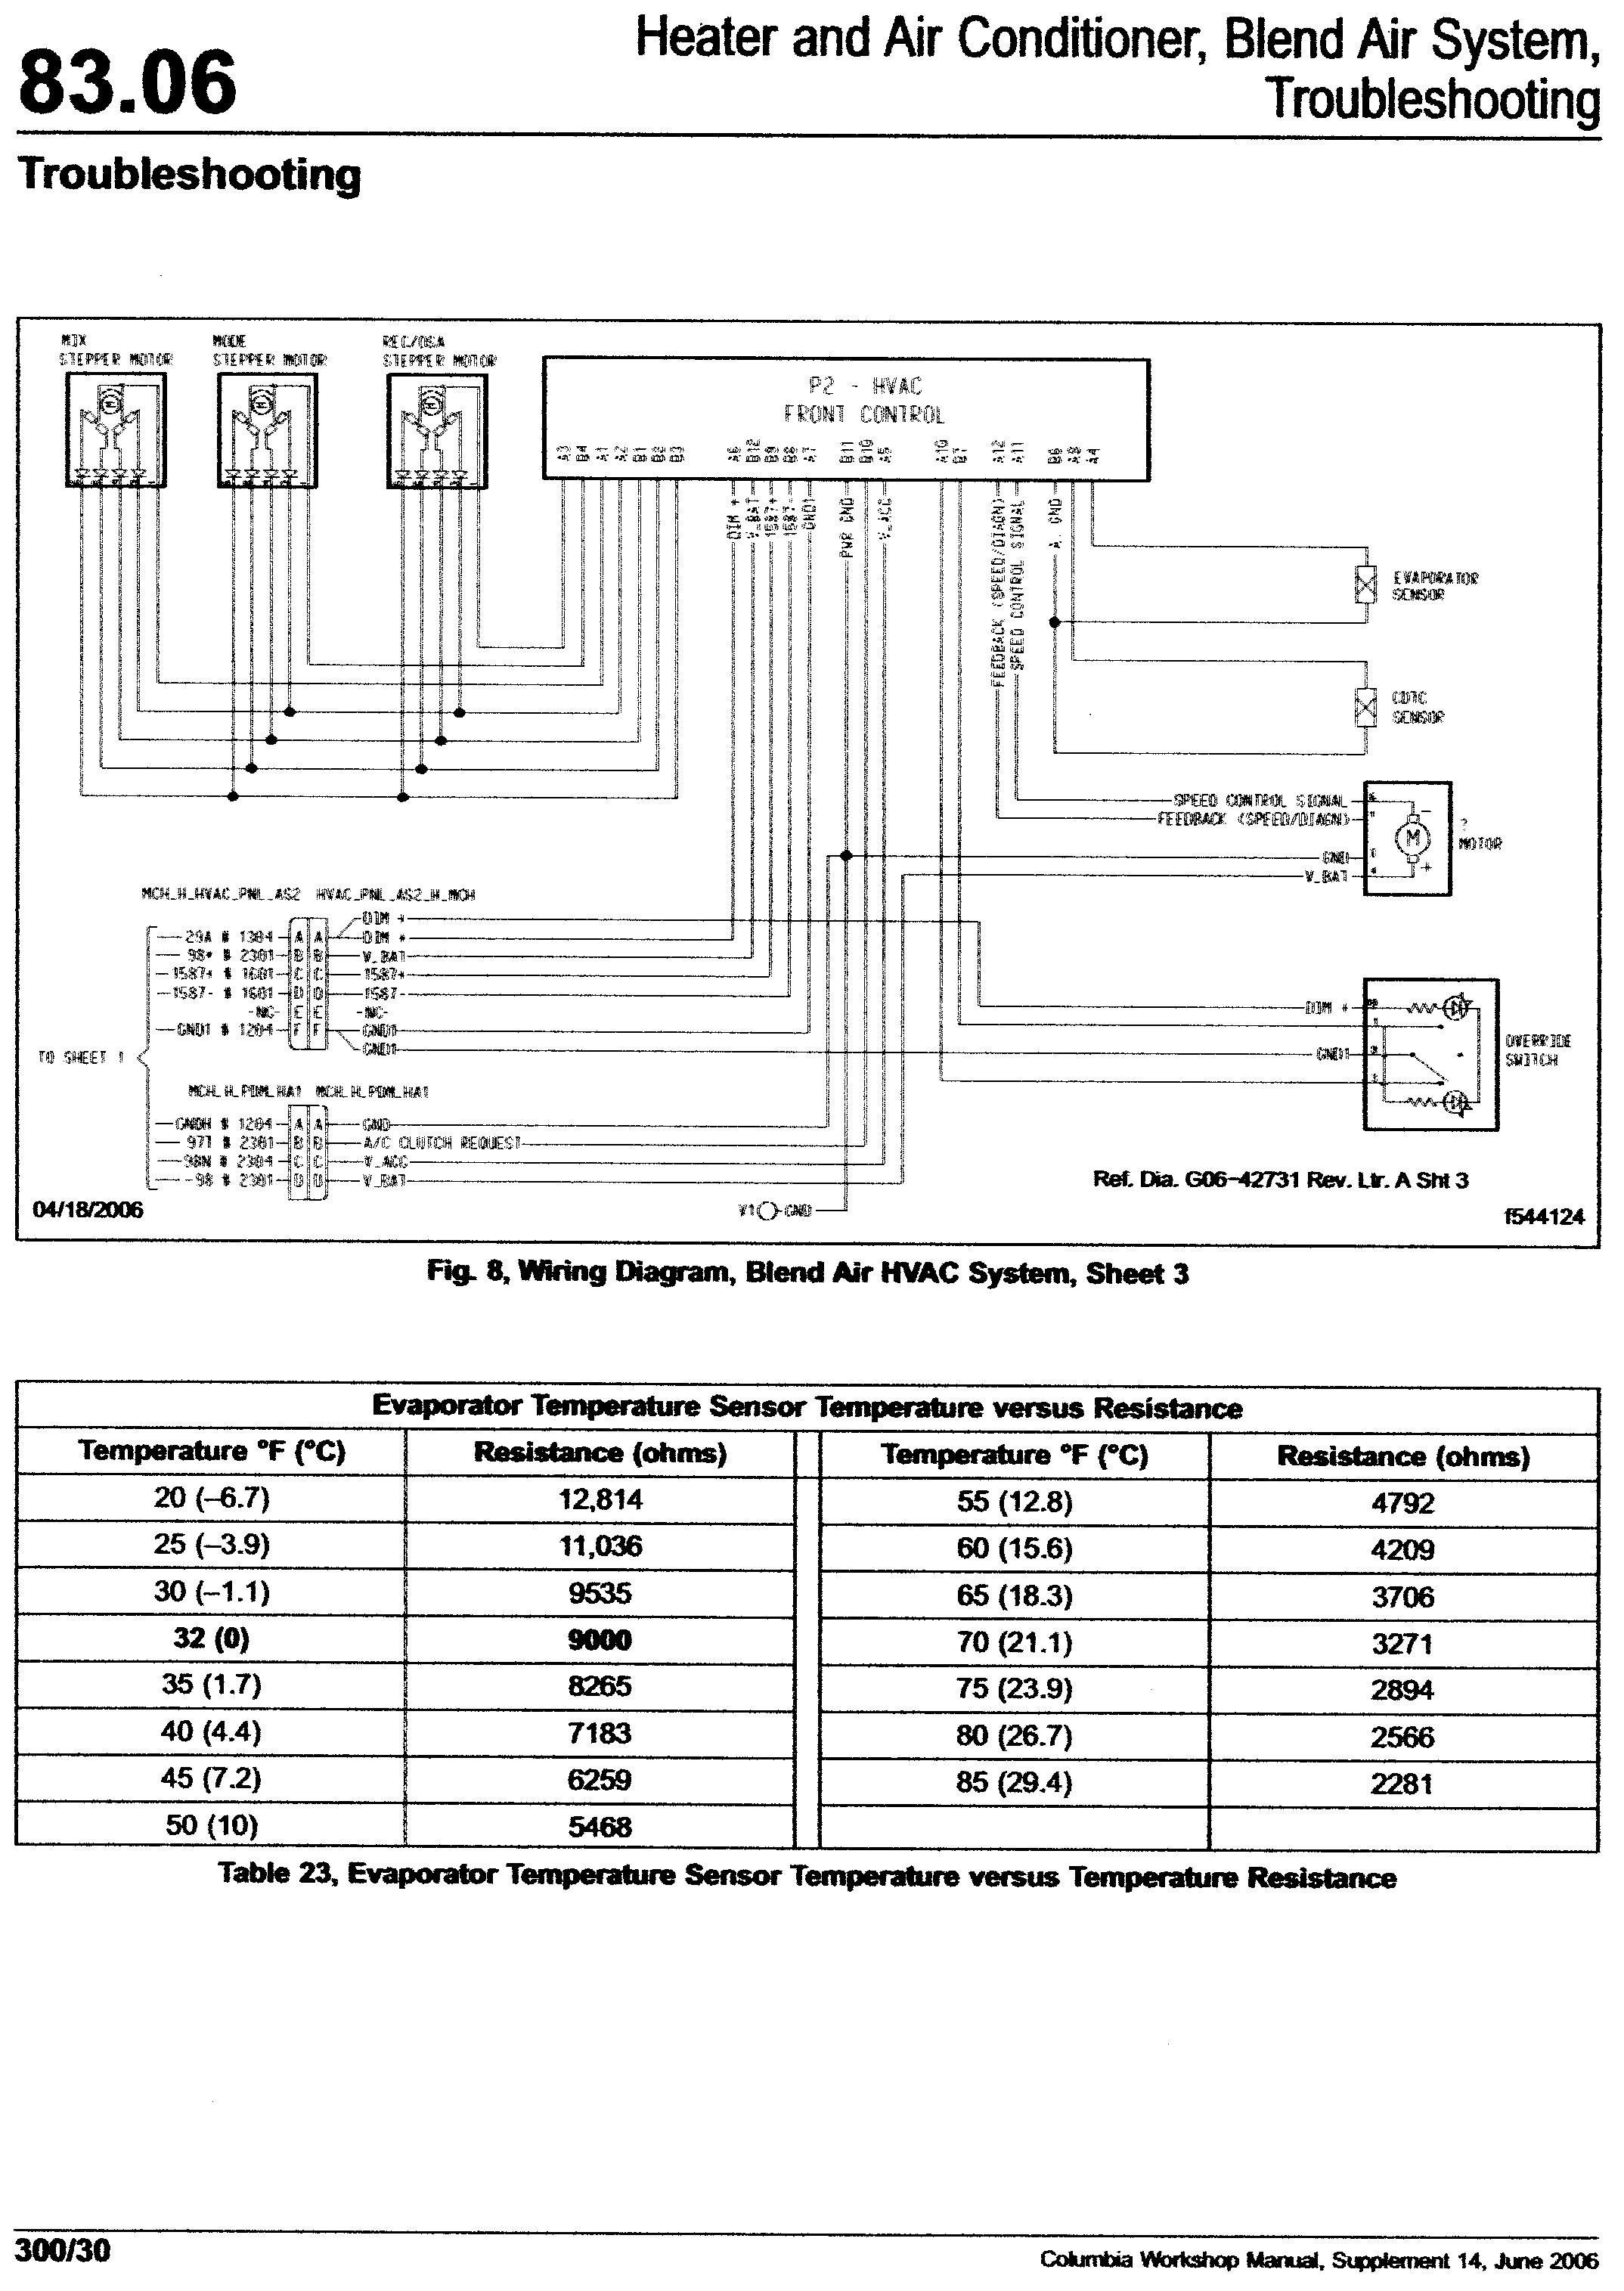 fiber bulkhead wiring diagram